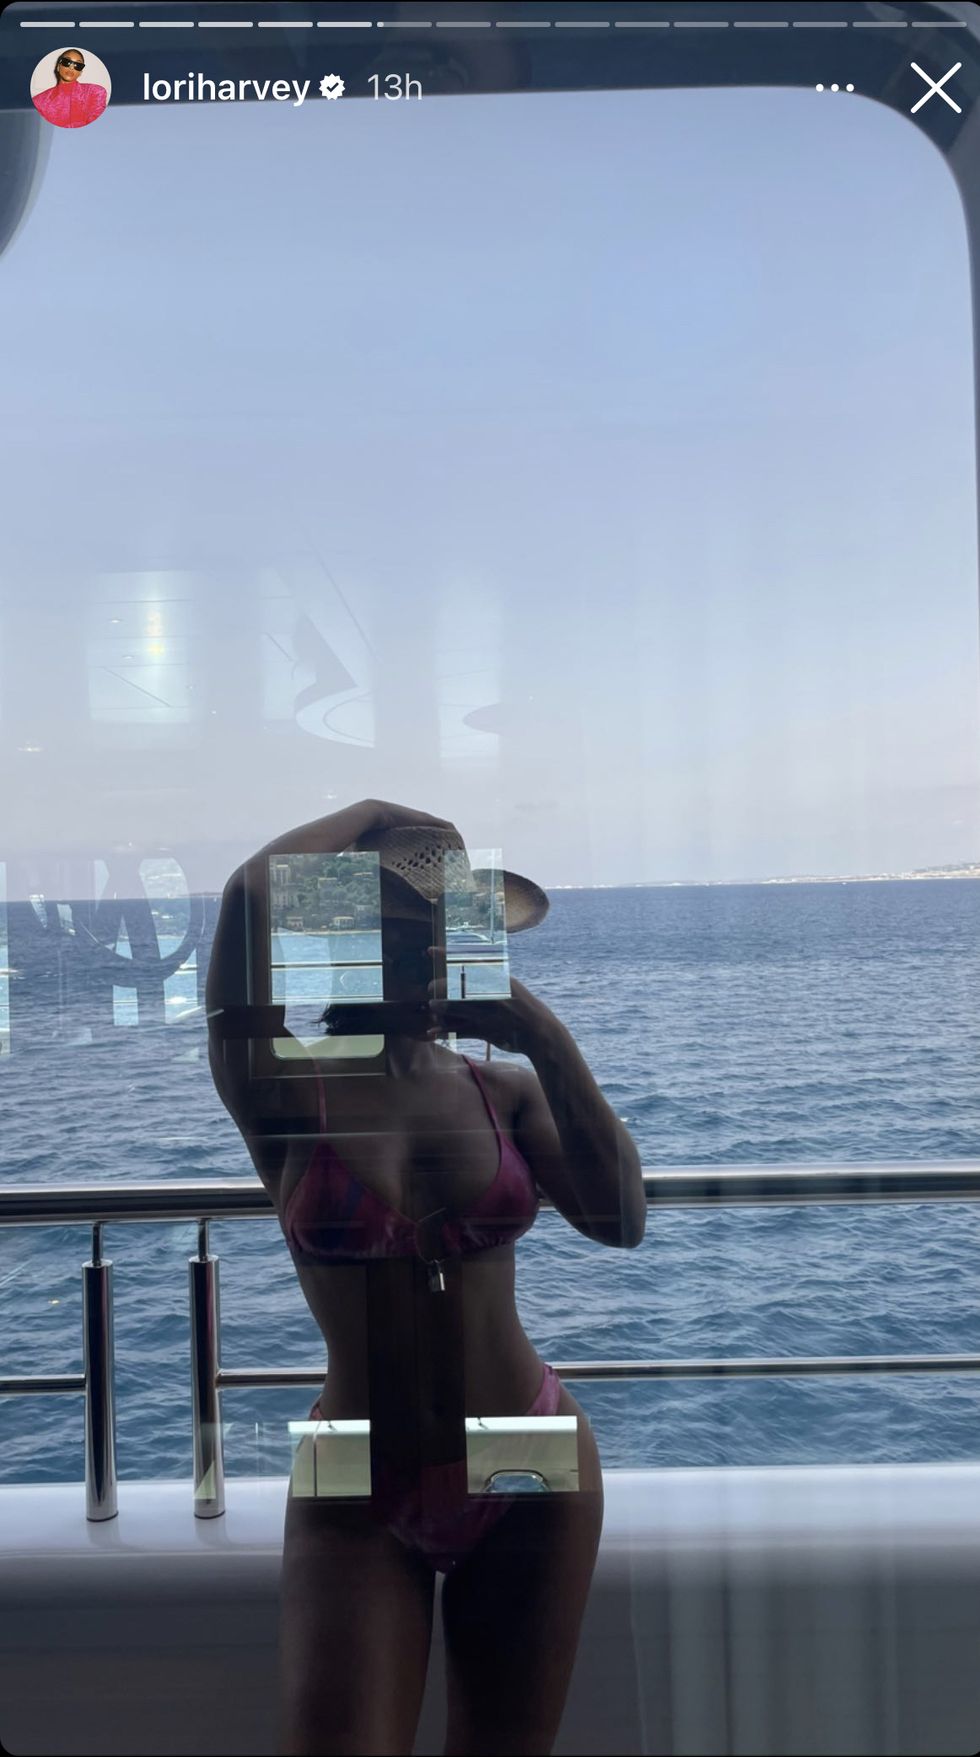 Lori Harvey Has a Boat Day in a Hot Pink String Bikini with